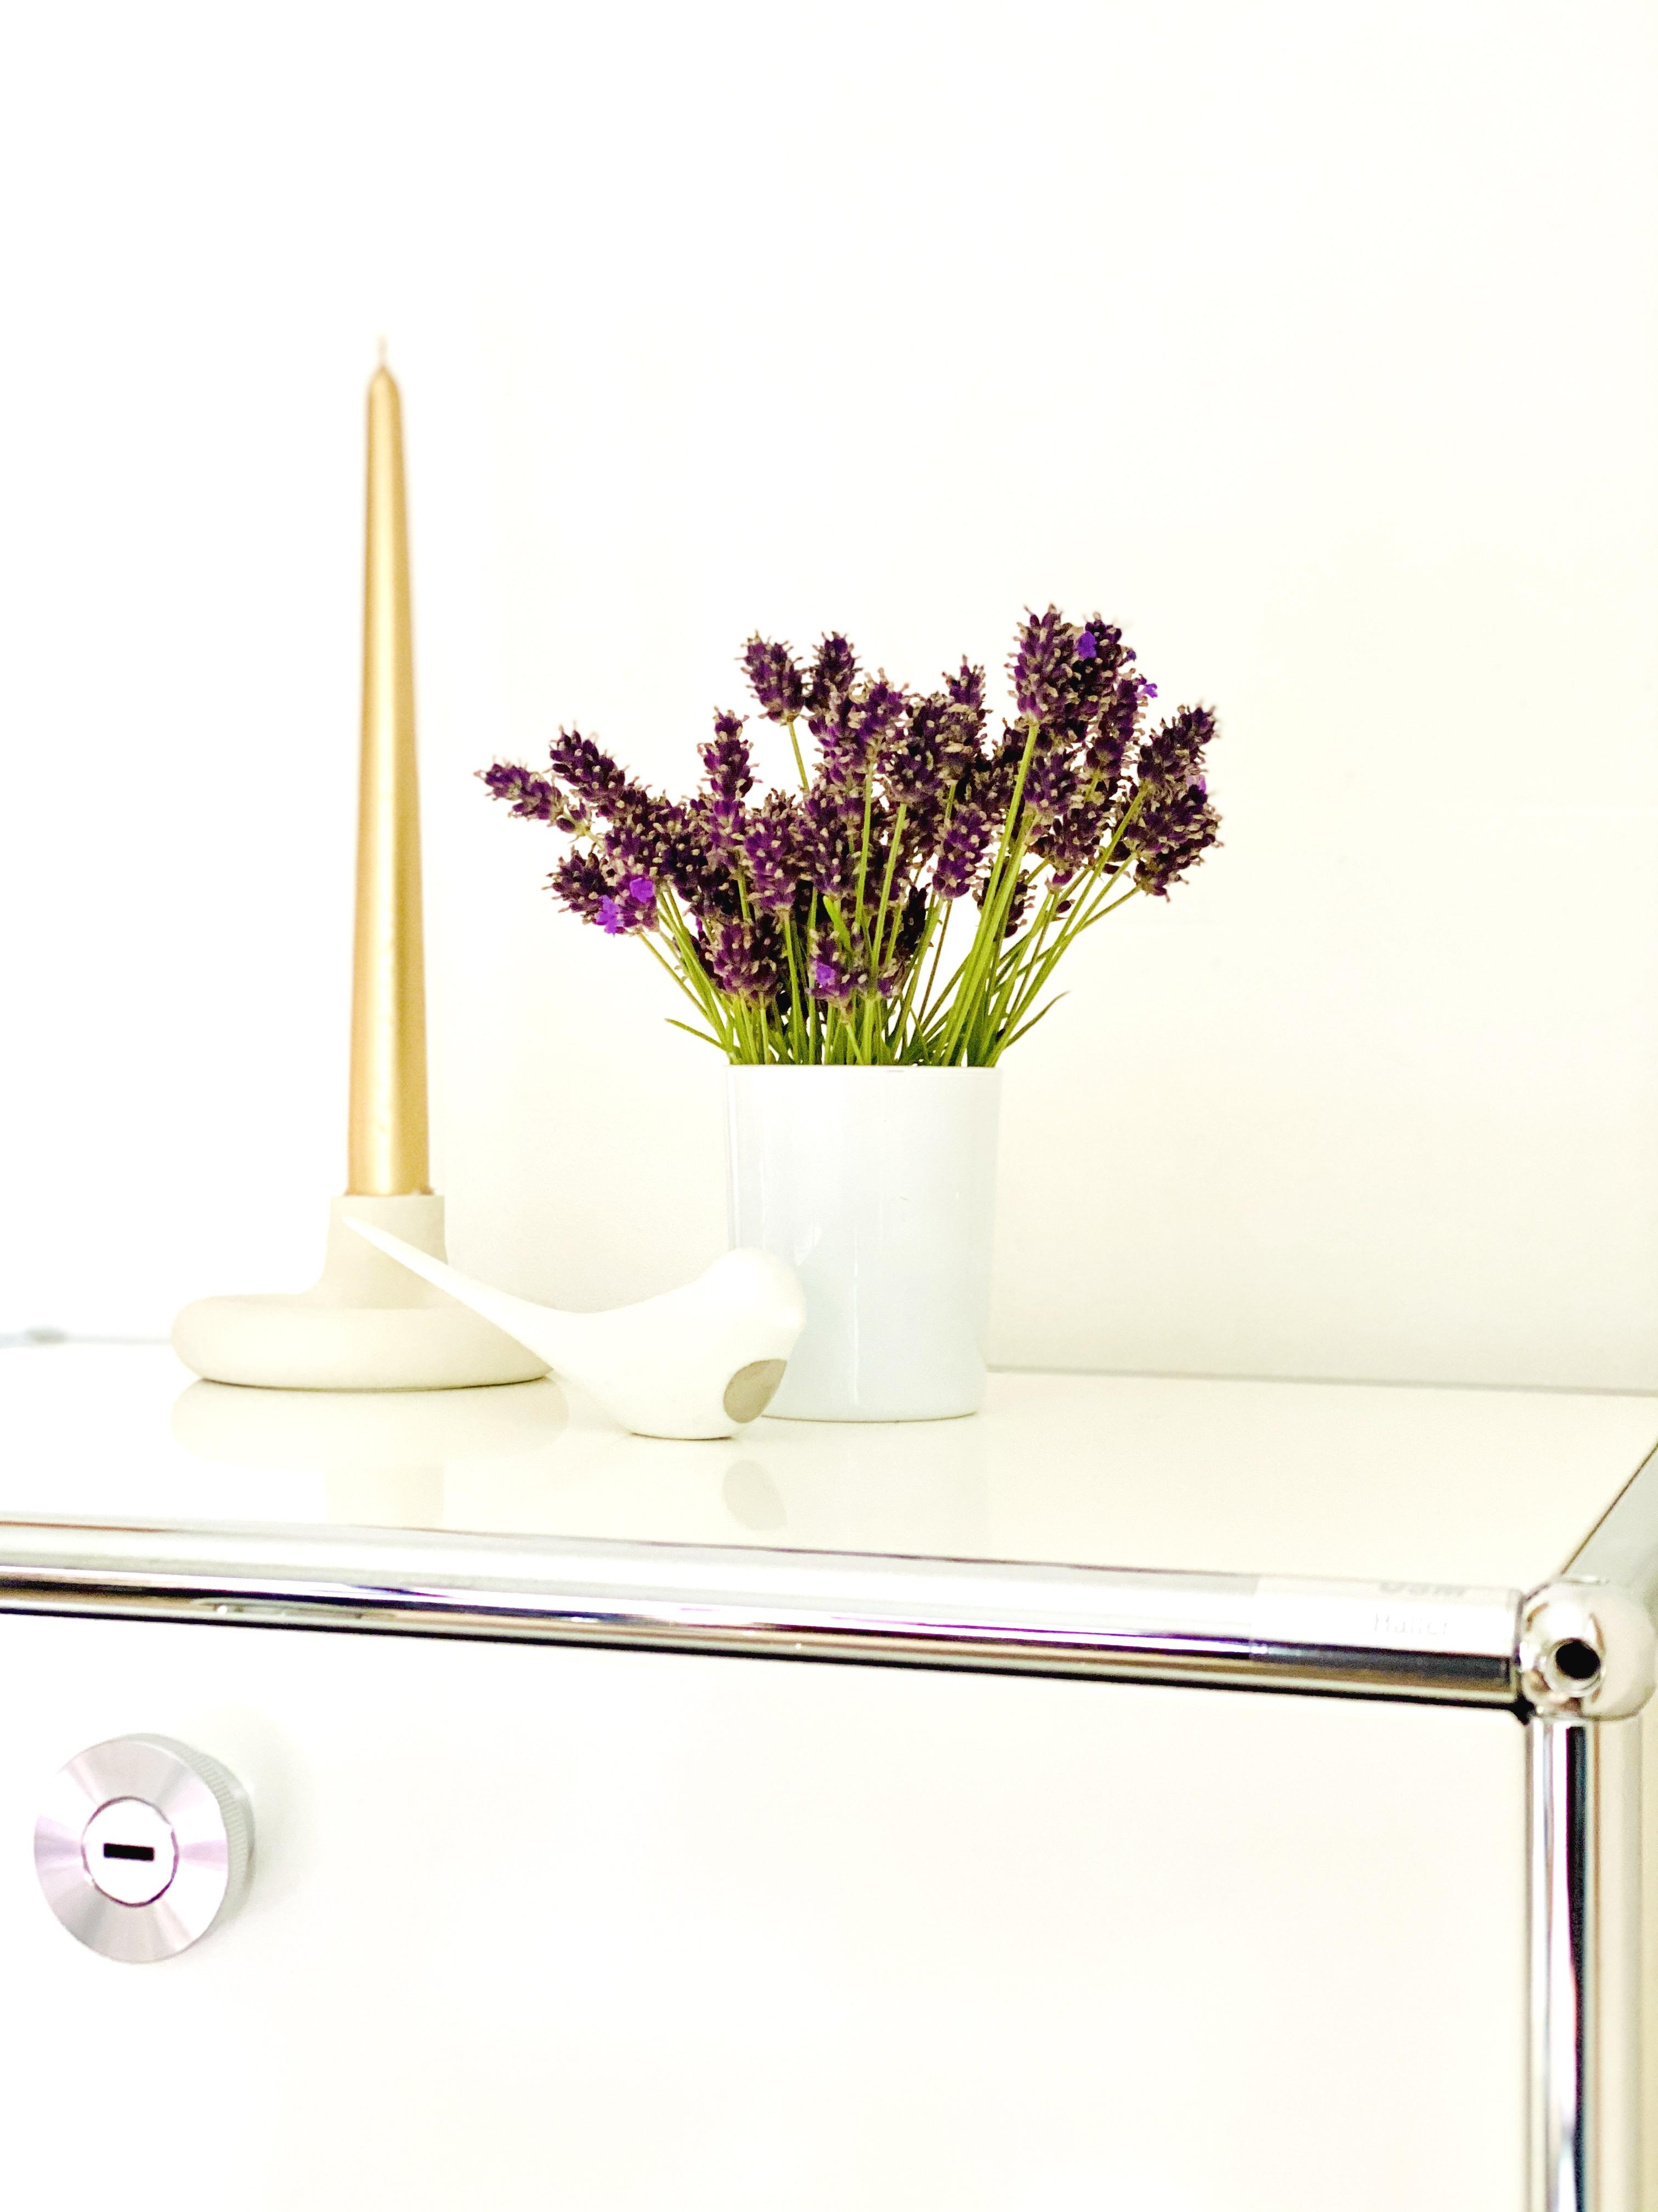 Kleiner Lavendelgruß zum Wochenende ...

#minimalism #lavendel #interior #usmhaller #whiteliving #freshflowers #vases 